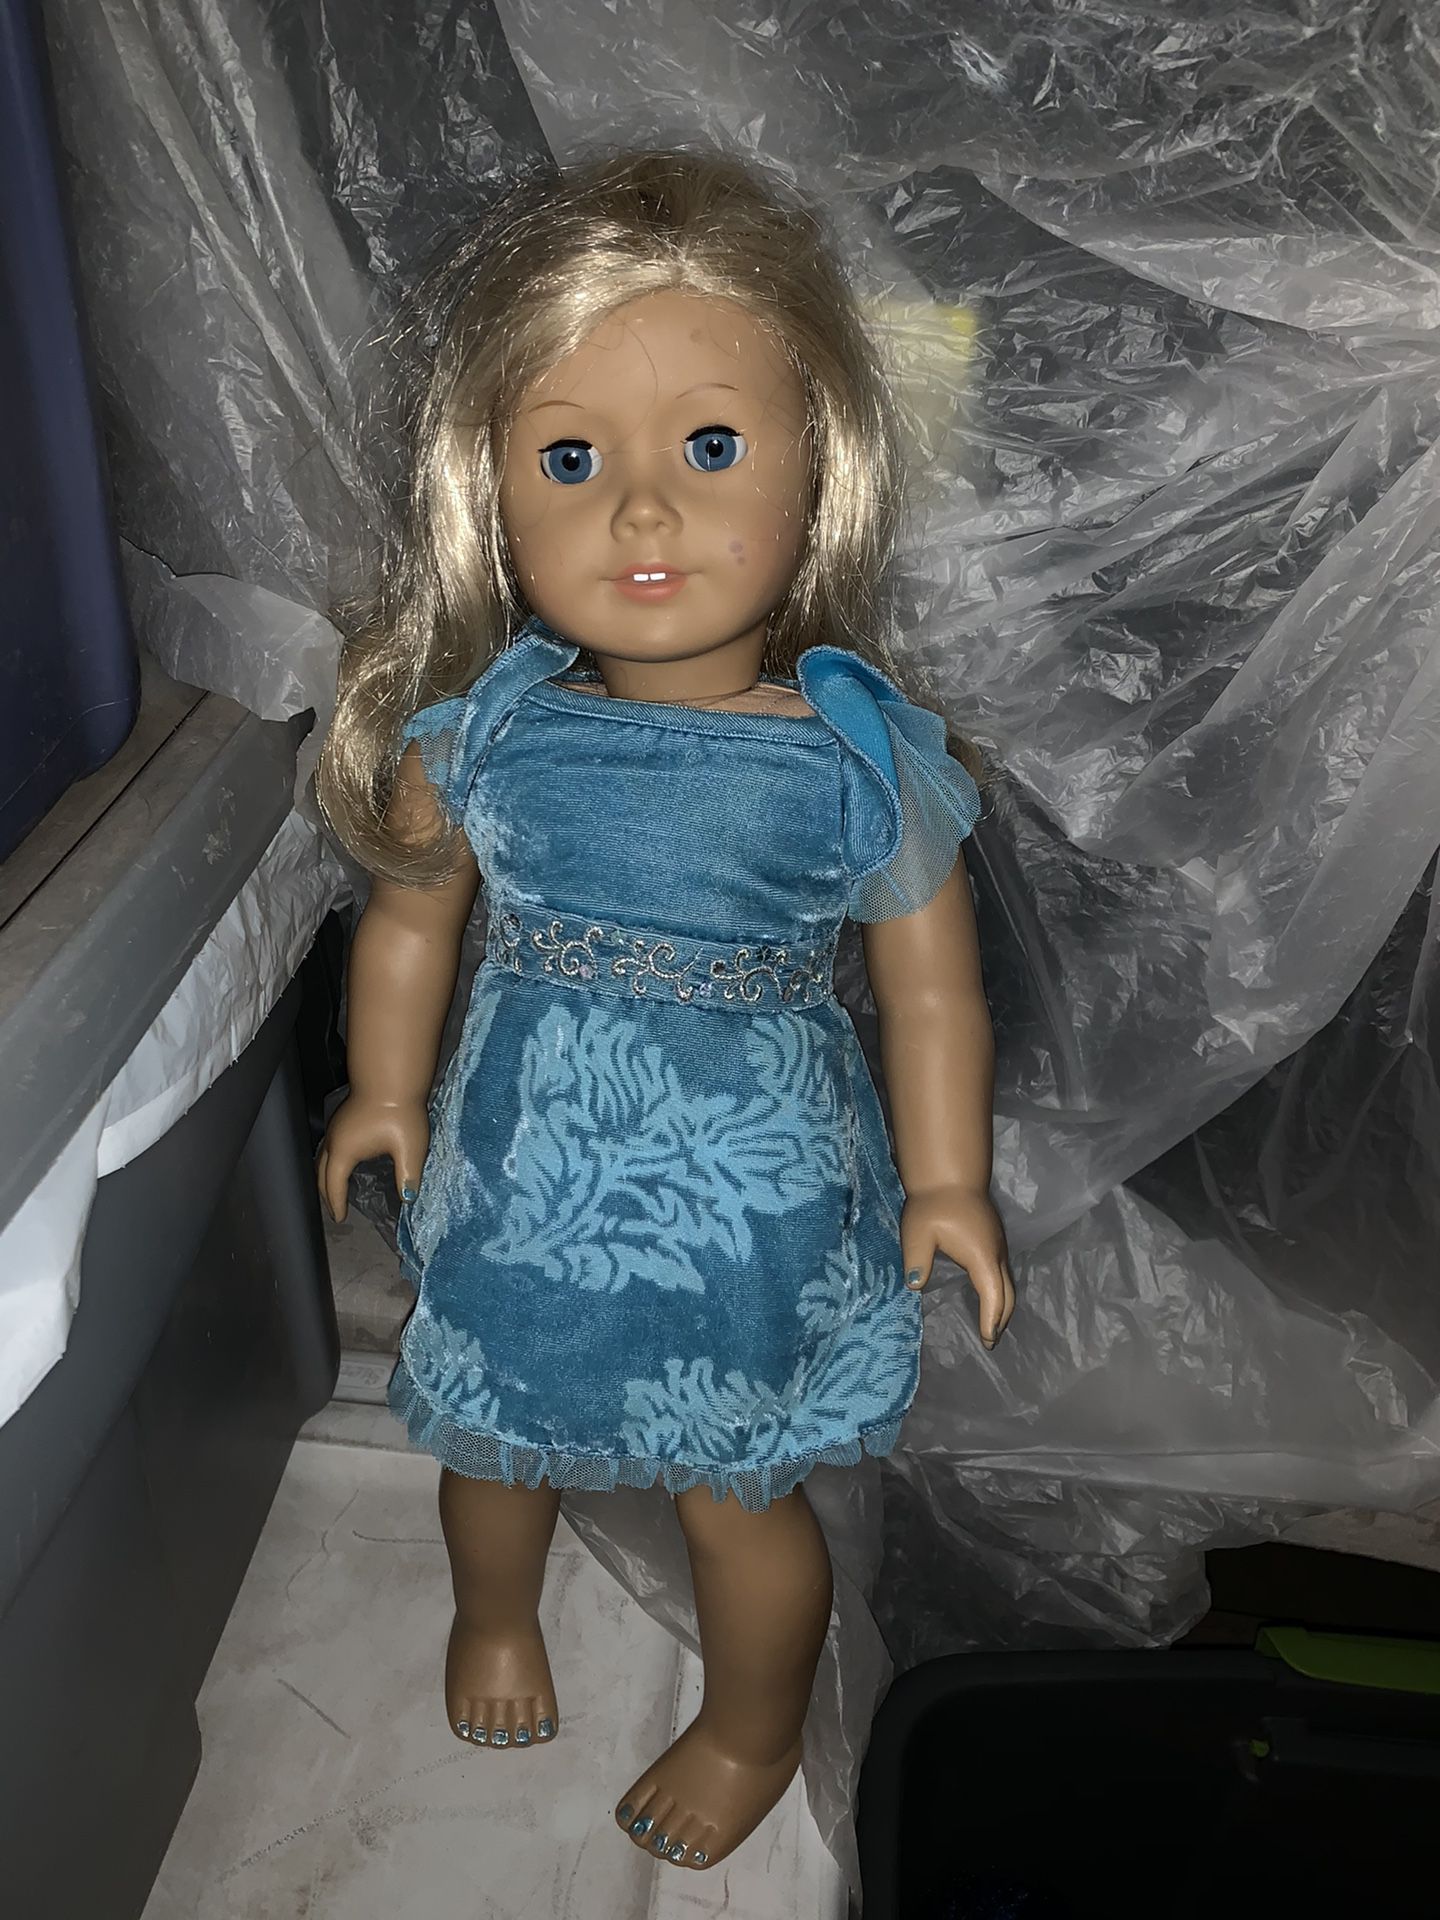 $60 each American Girl Doll